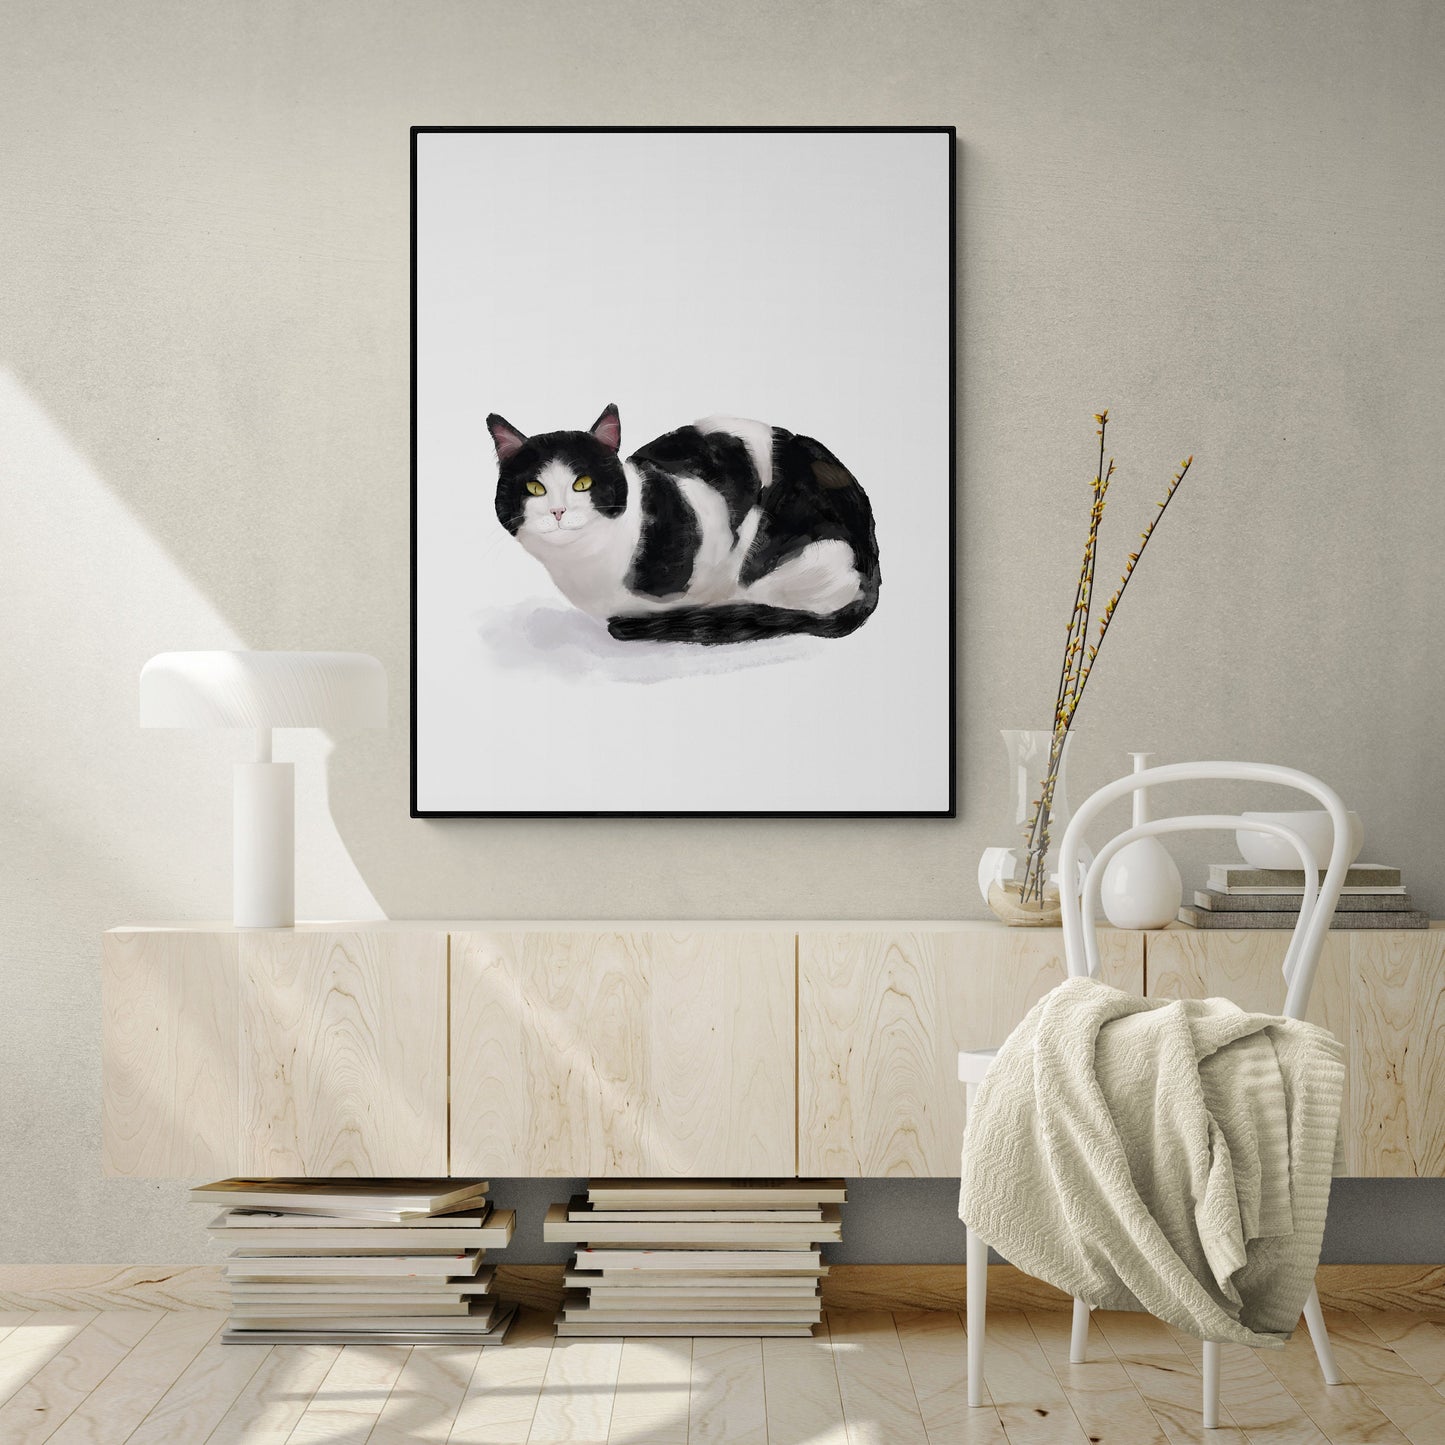 Original Tuxedo Black and White Cat Print, Tuxedo Cat Art, Black and White Cat Painting, Tuxedo Cat Print, Black and White Tuxedo Cat Art,